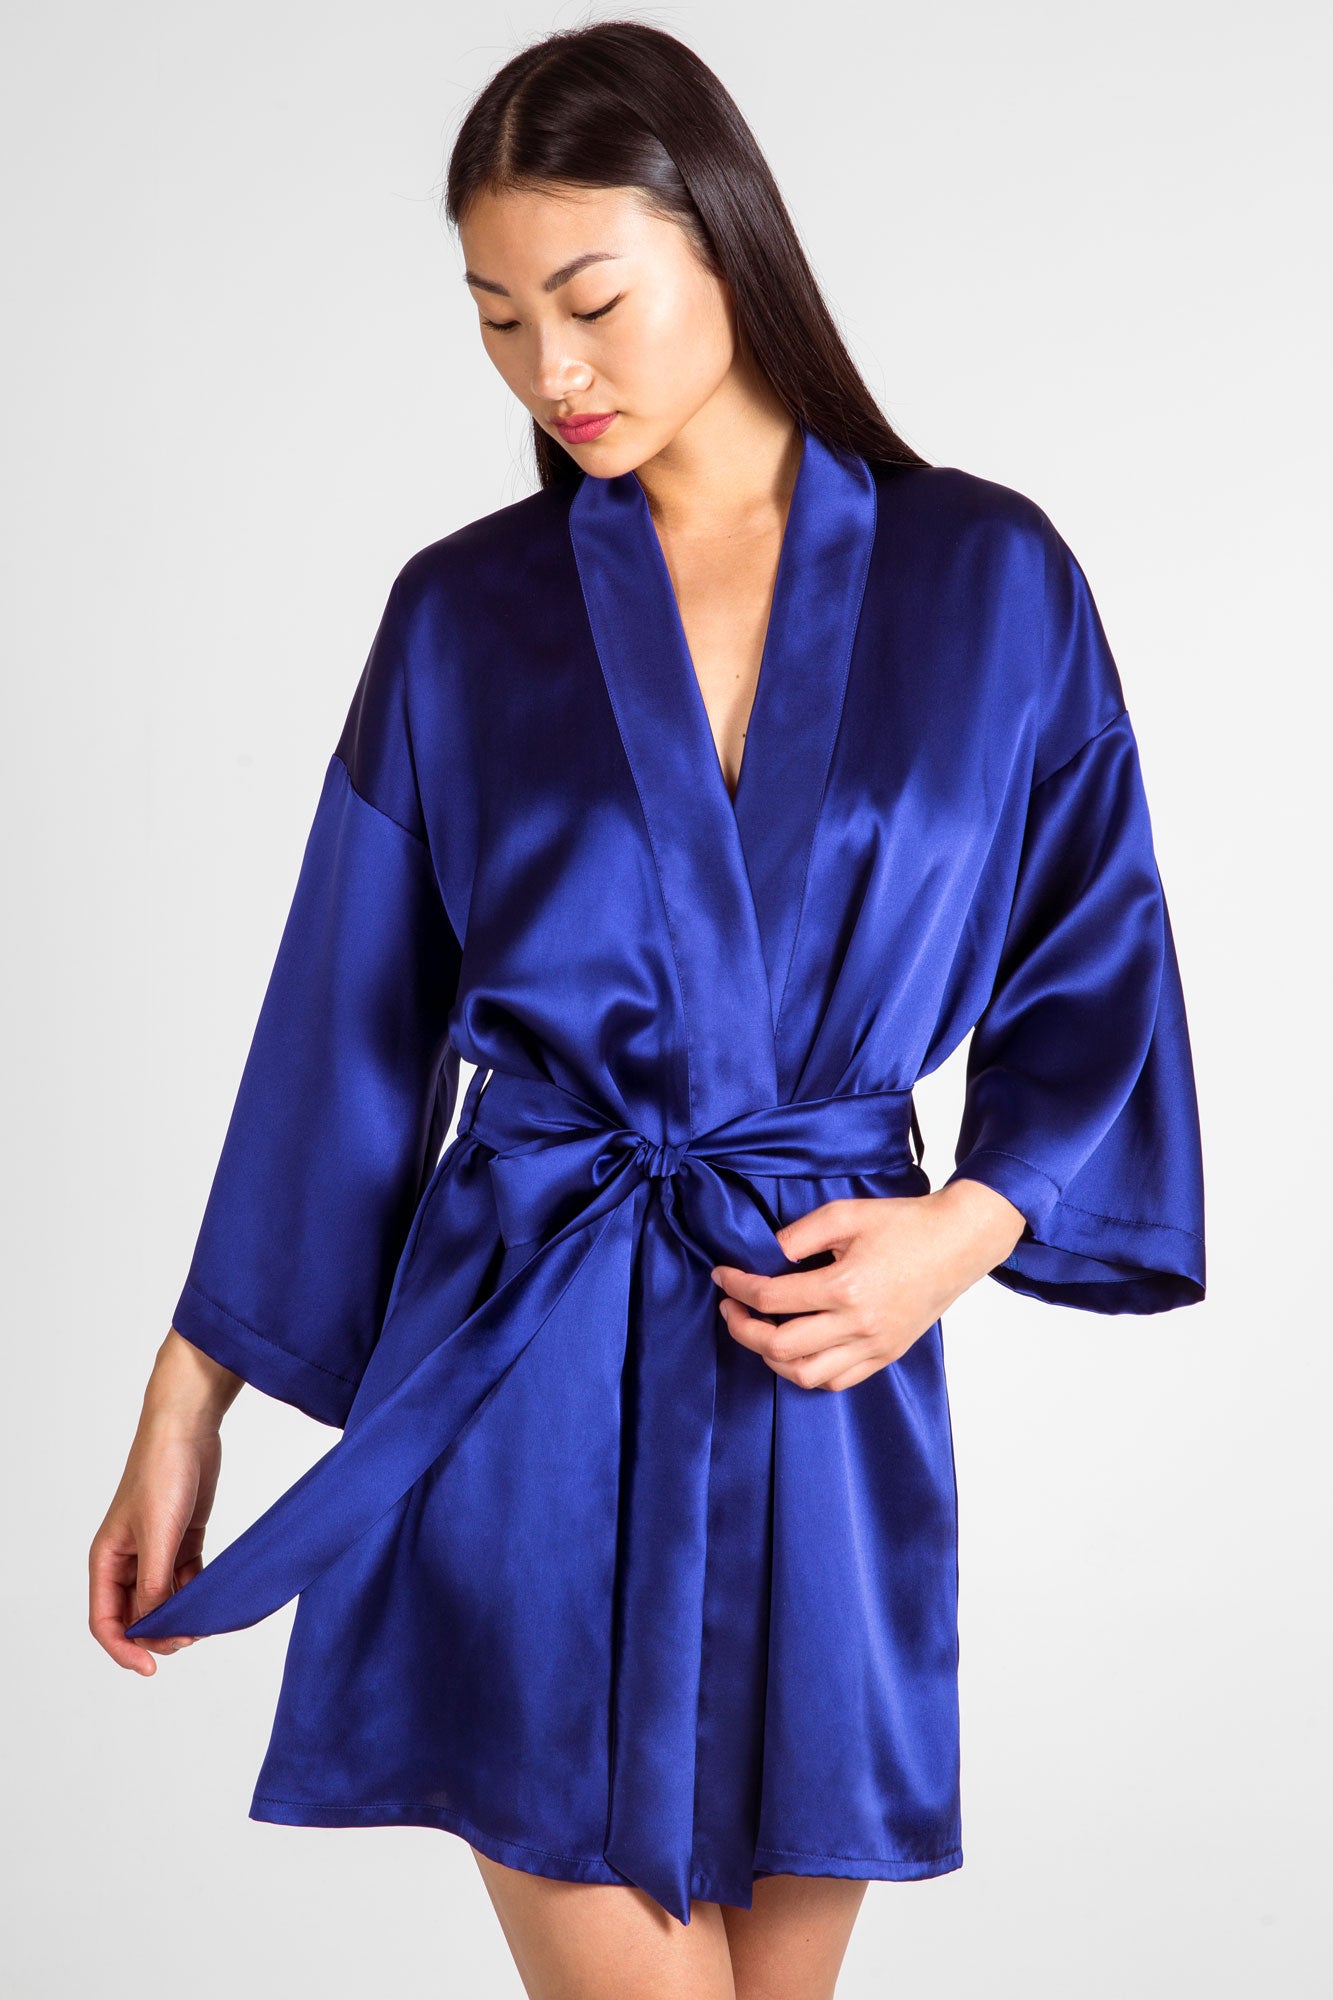 LV Luxury Silk Fabric ASBS337 for Designer Shirts, Dresses, Blouses,  Sleepwears, Suits, Night Dress